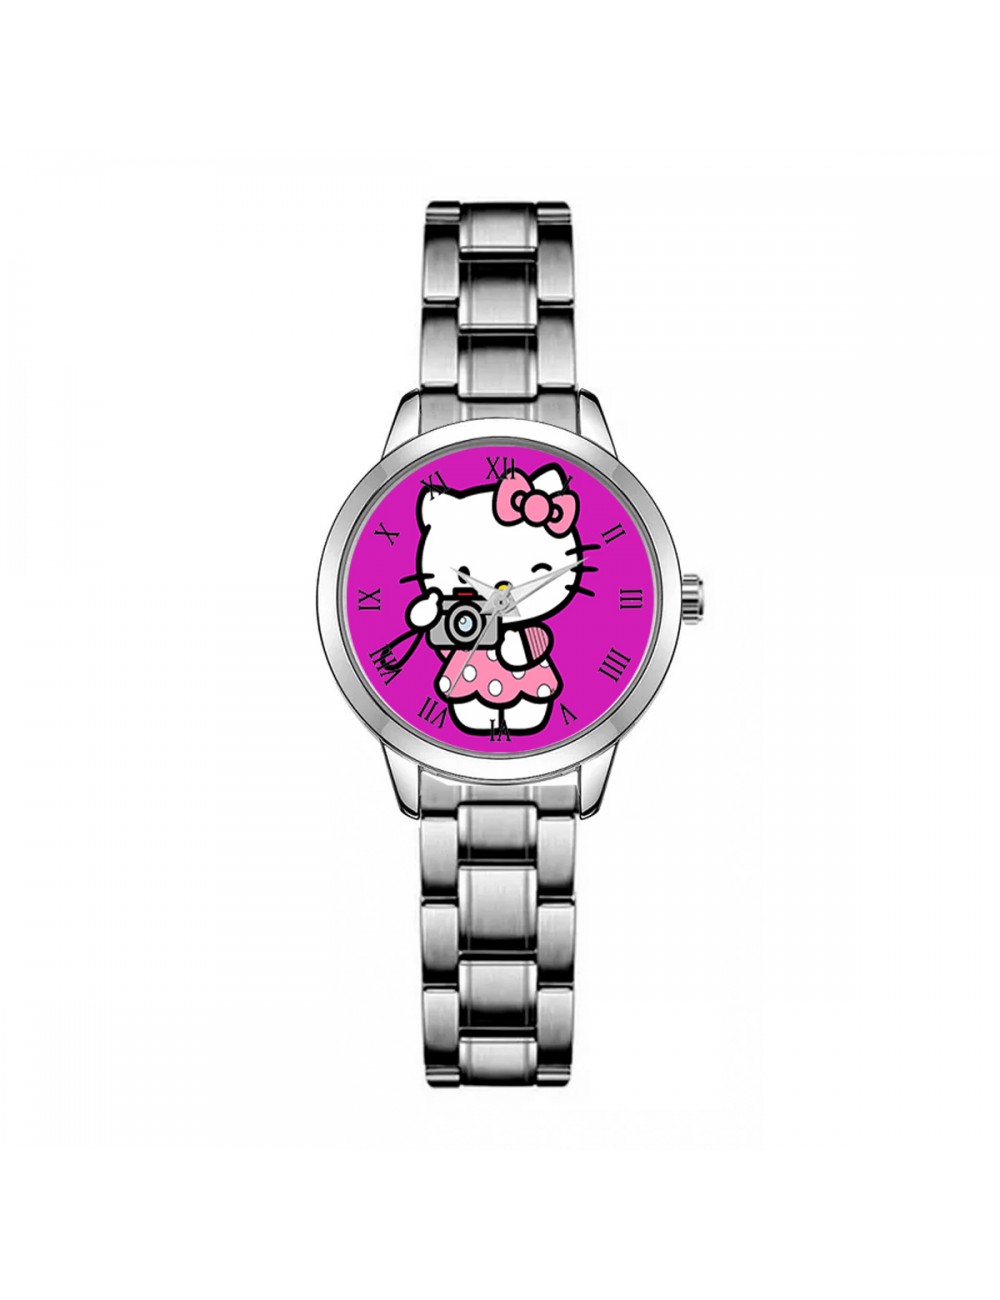 Reloj Hello Kitty 59,900.00